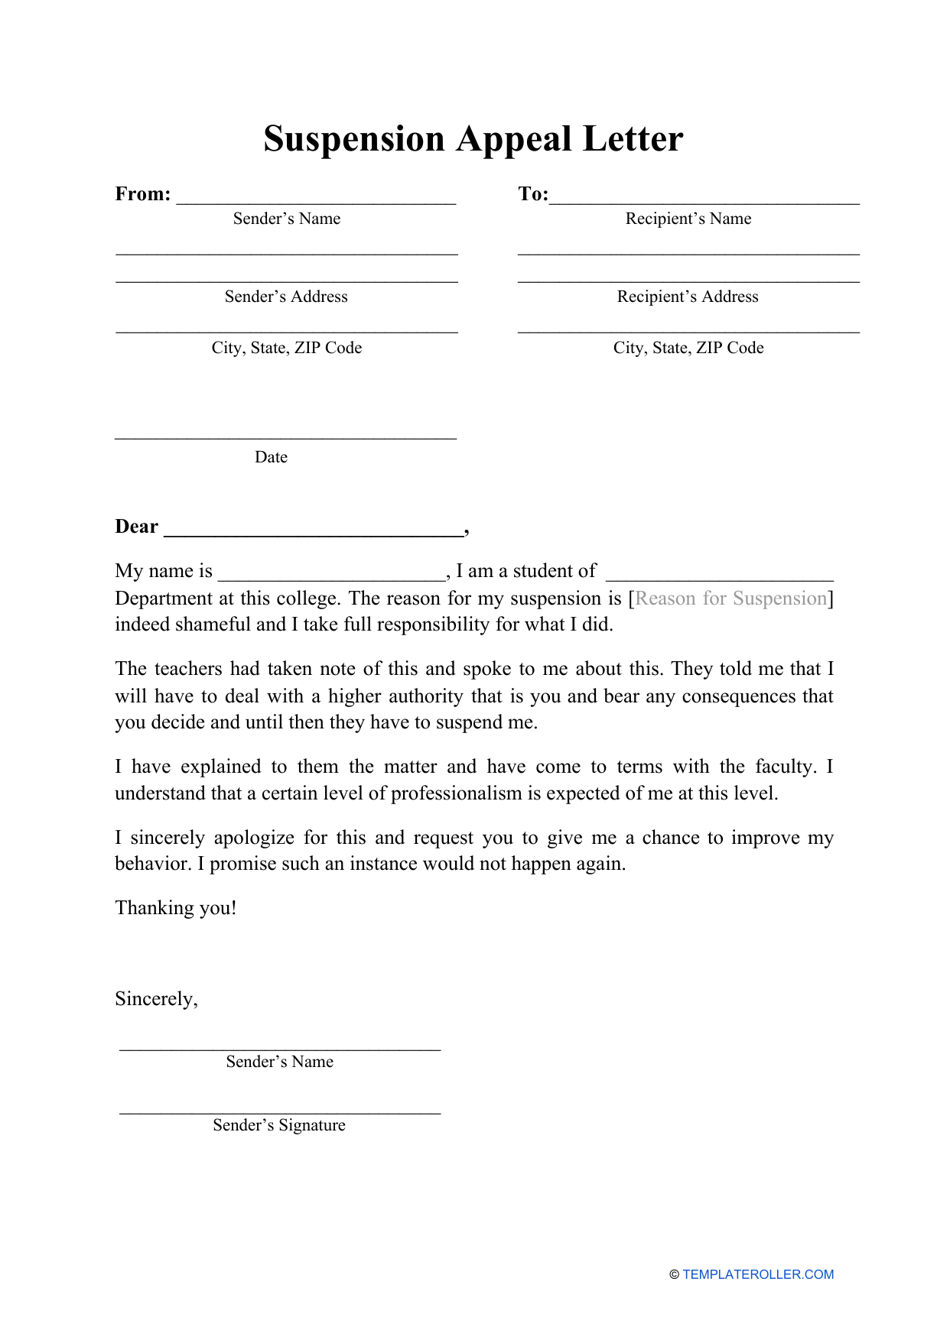 Suspension Appeal Letter Template Download Printable PDF